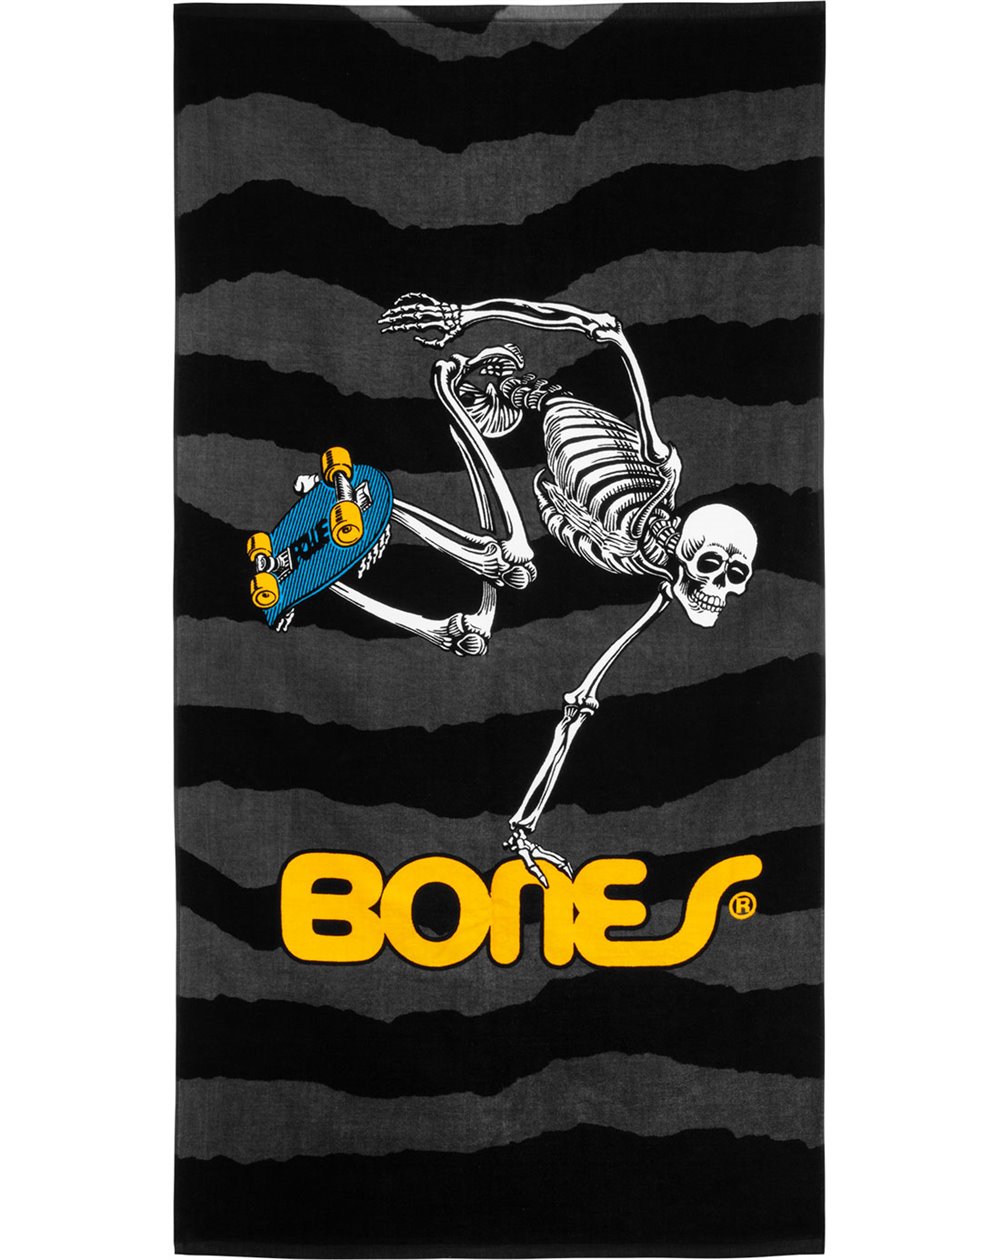 Powell Peralta Sk8board Skeleton Telo Mare